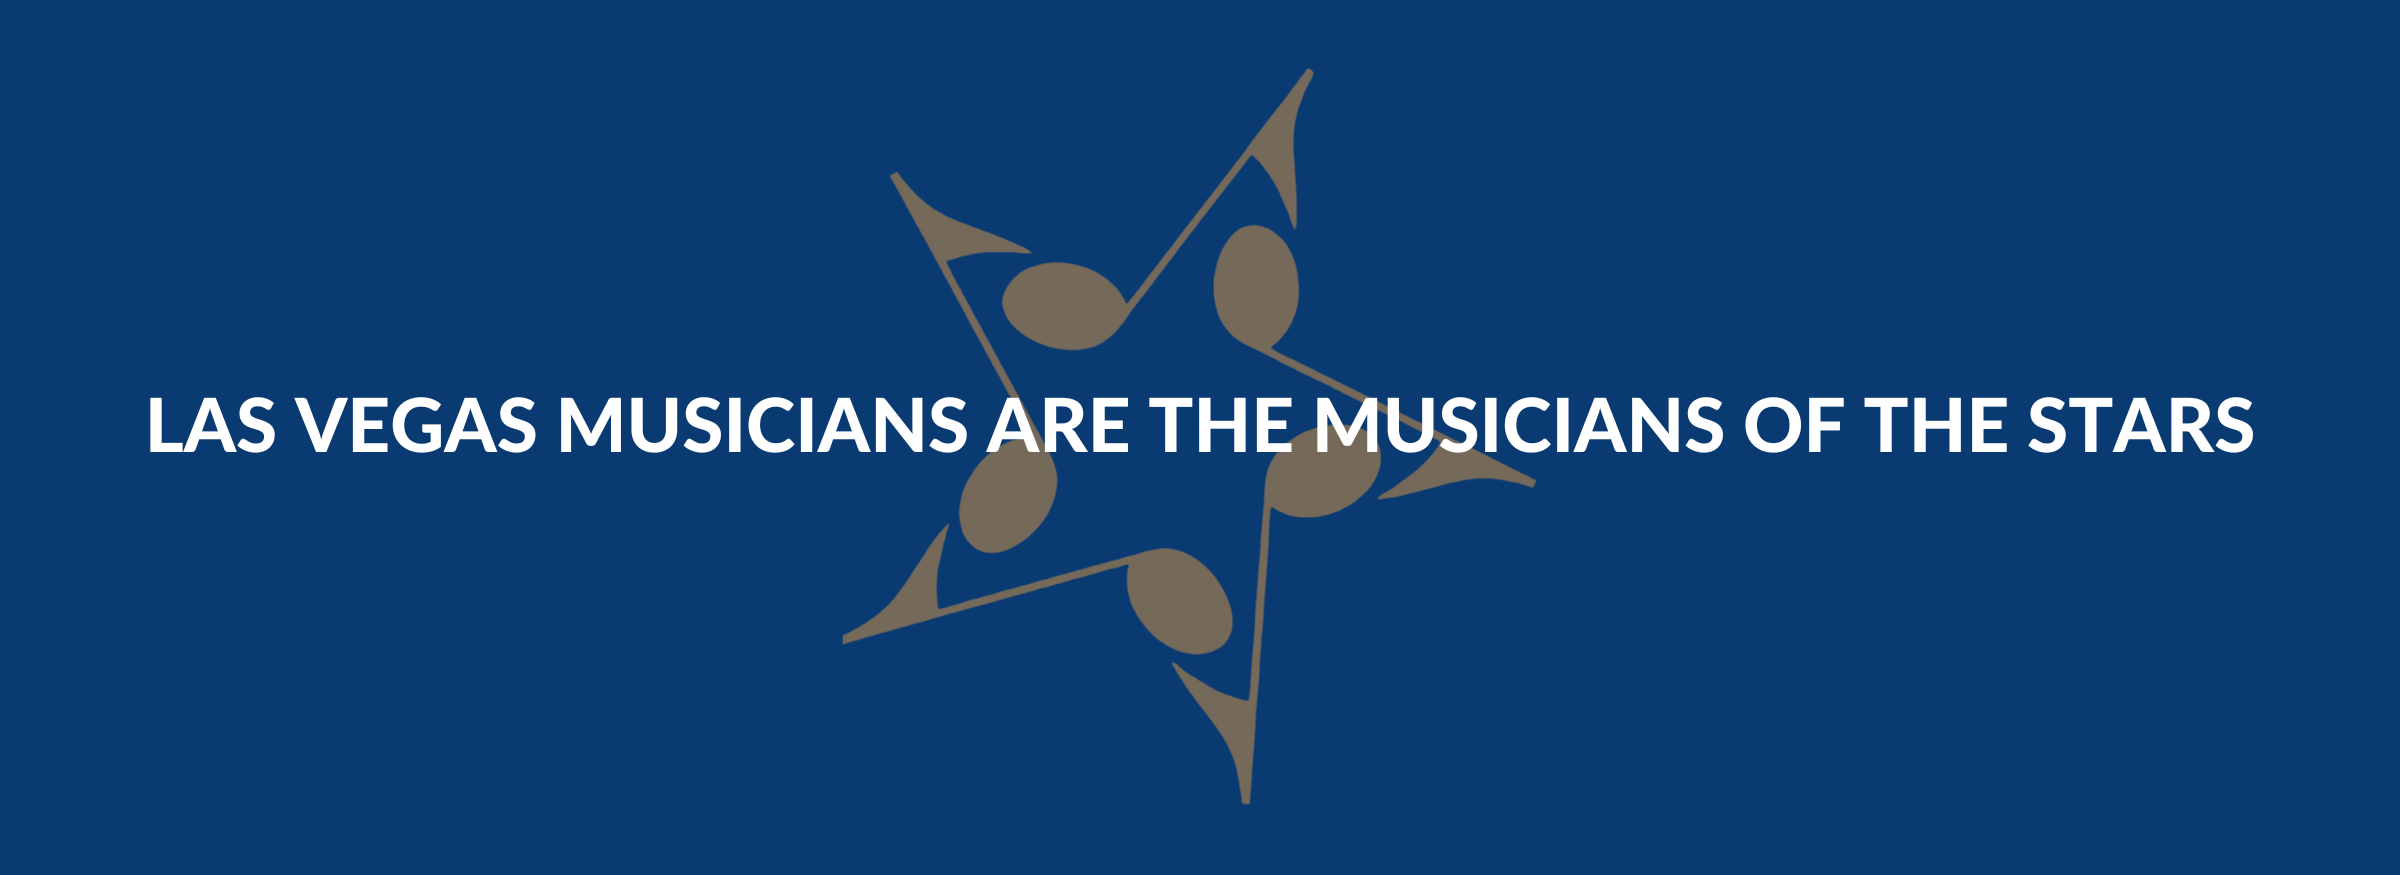 Musicians Union of Las Vegas A Community of Professionals